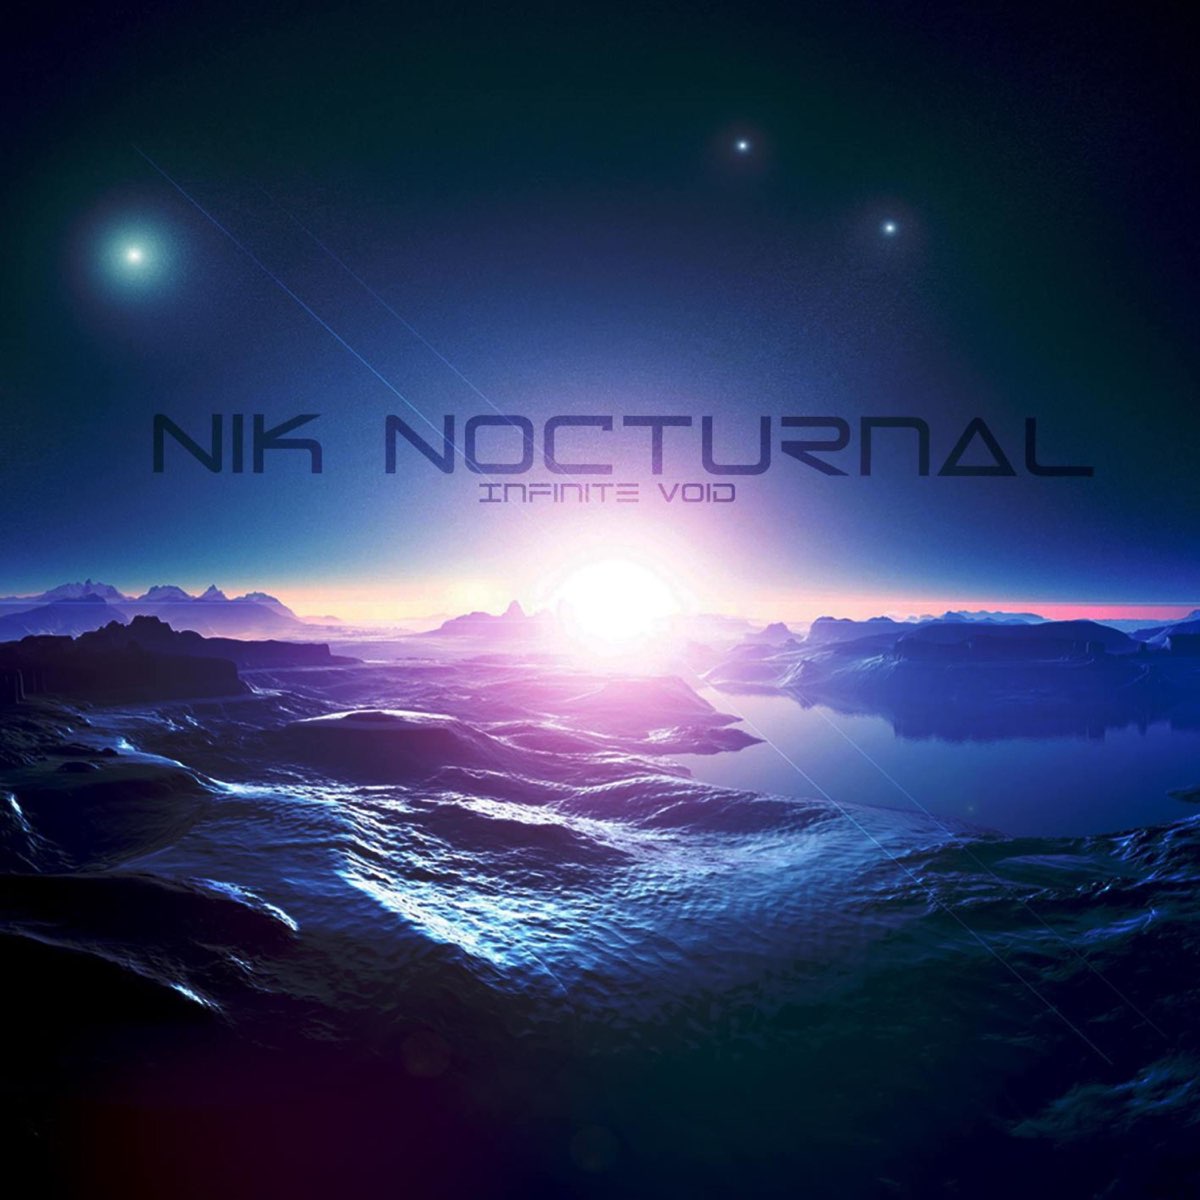 Infinite Void. Nik Nocturnal альбом. Obscurity Nik Nocturnal. Nik nocturnal